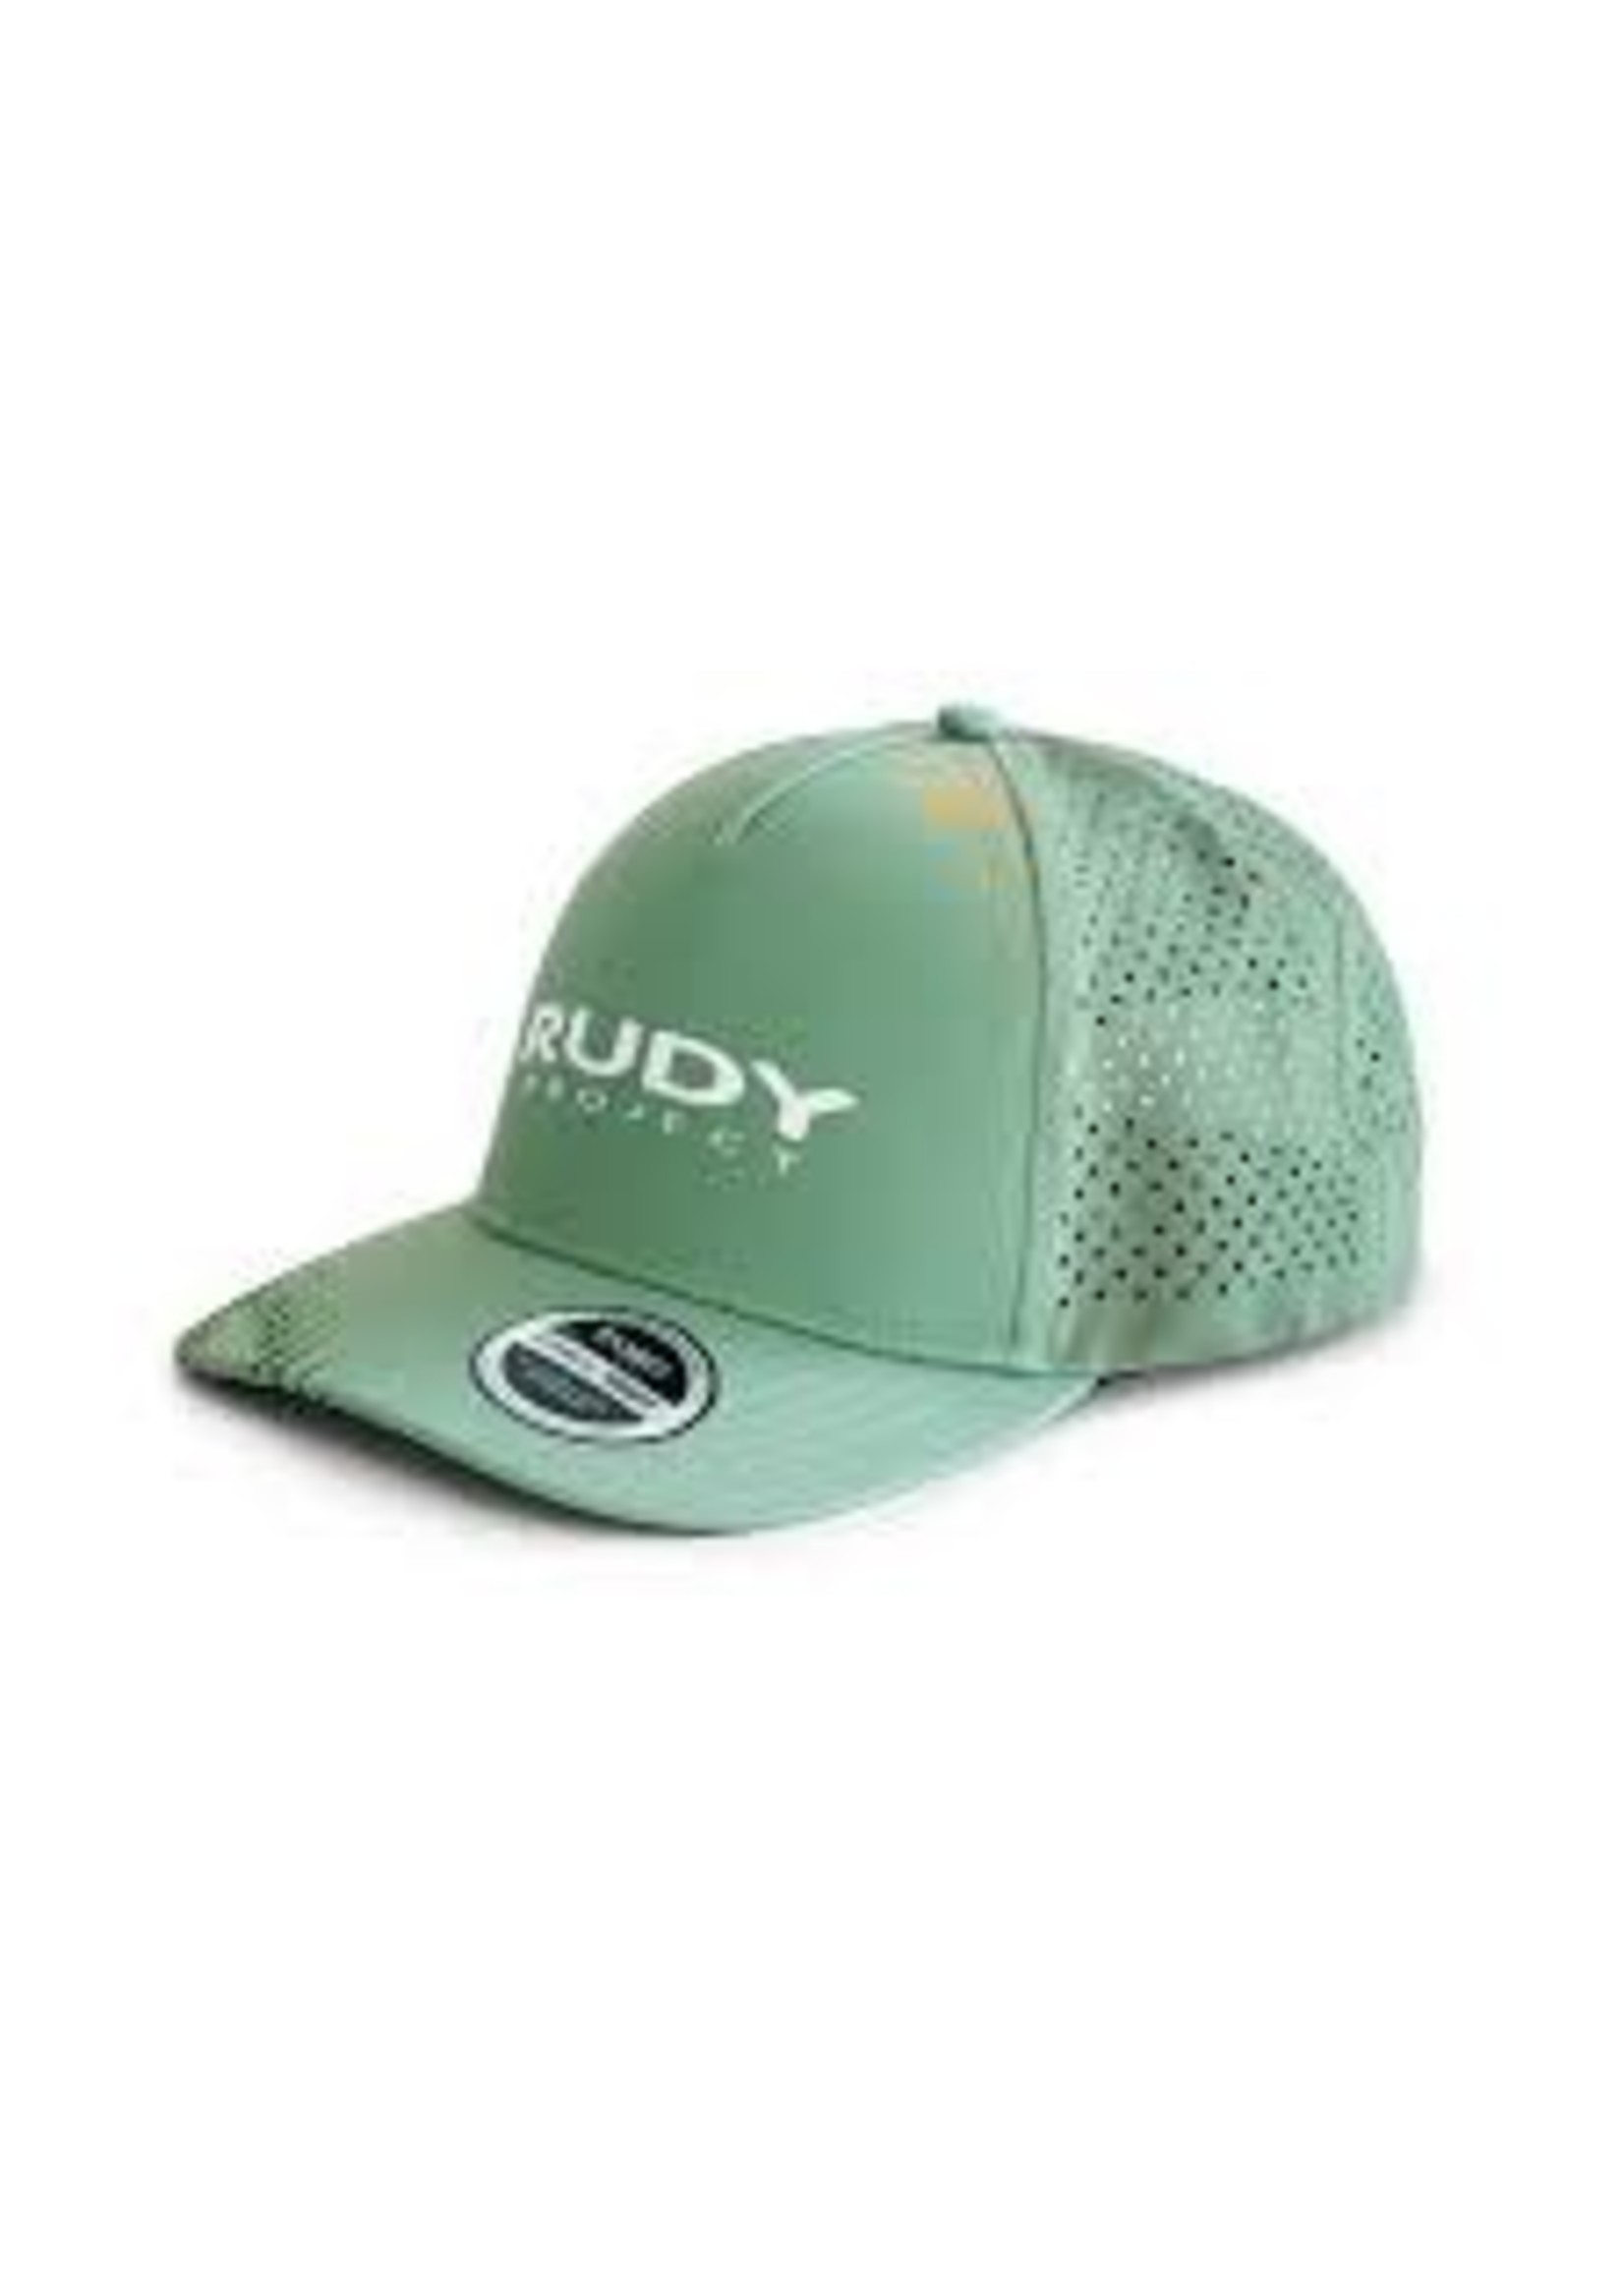 Rudy Project RUNNING TRUCKER HAT